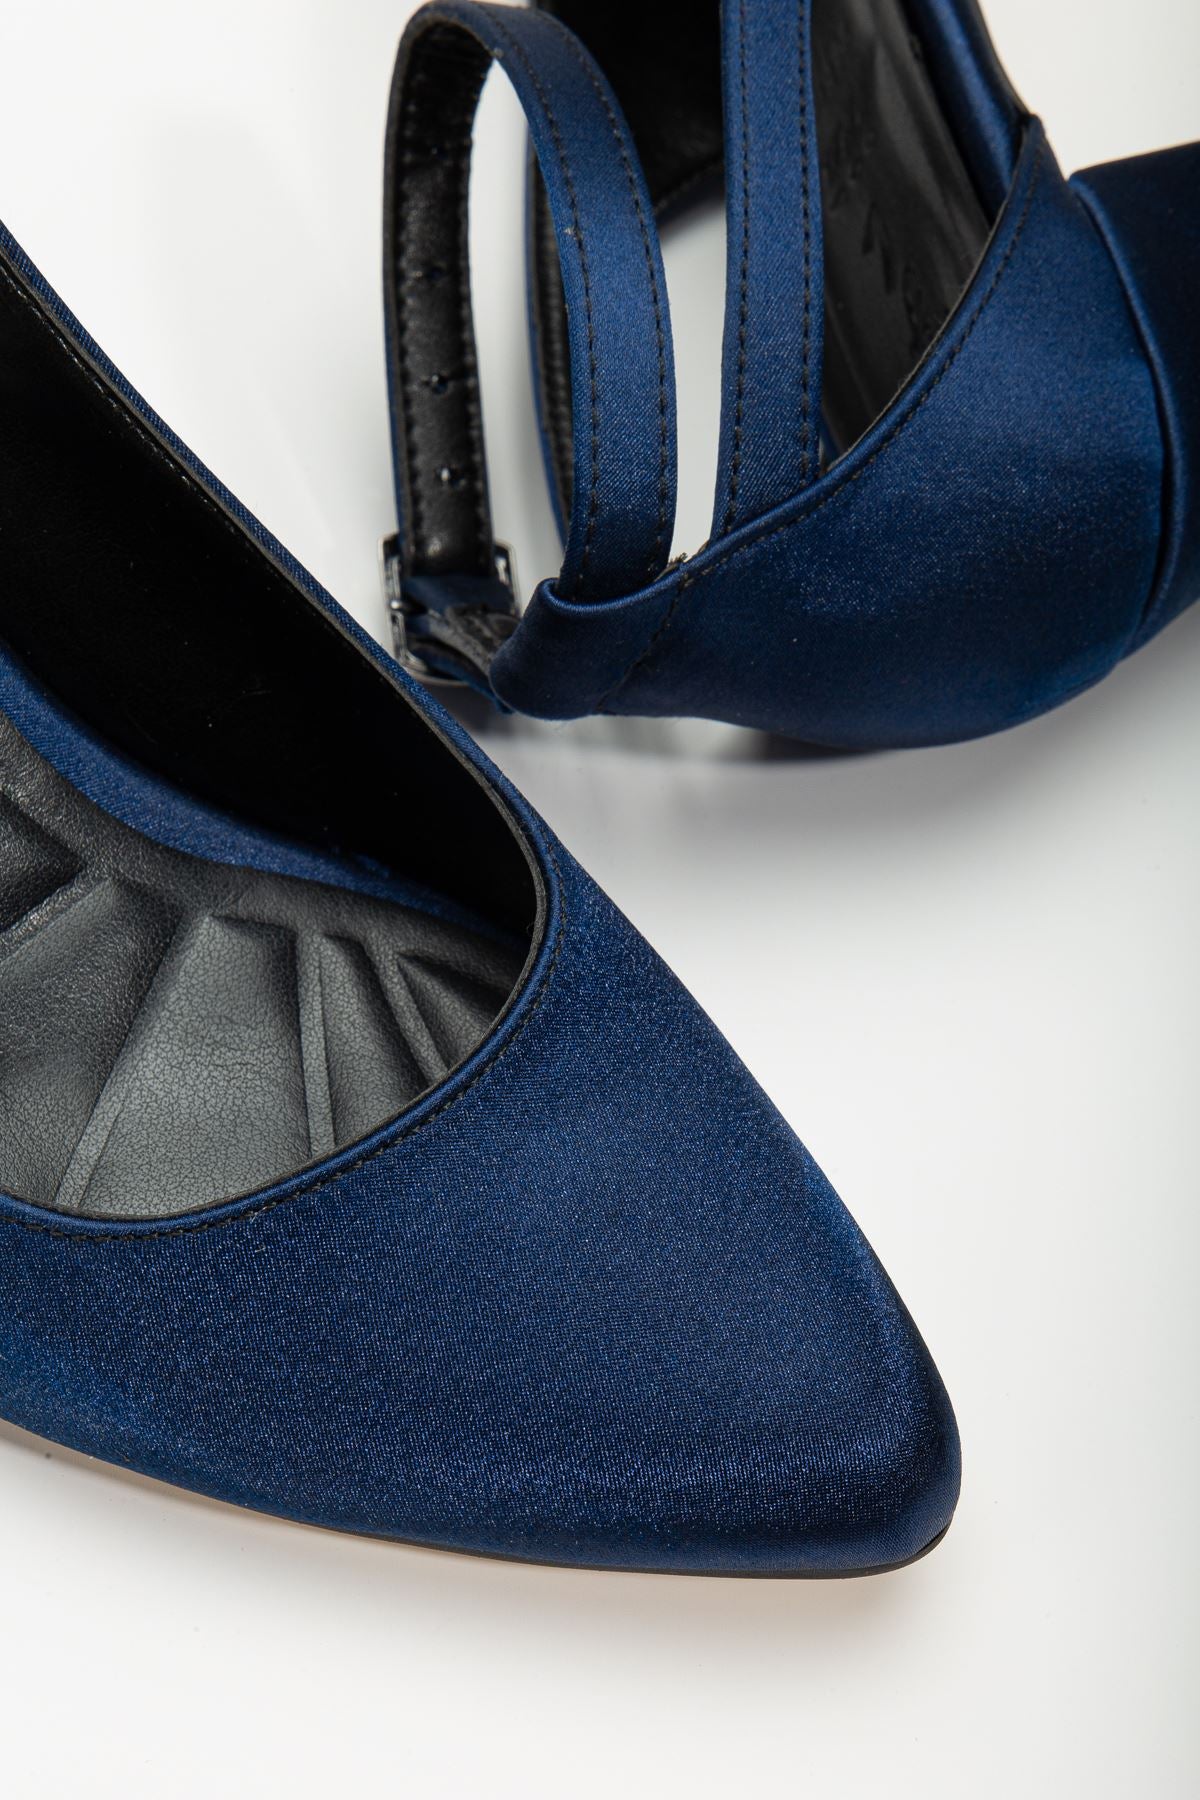 Hero Heeled Navy Blue Satin Women's Shoes - STREETMODE™